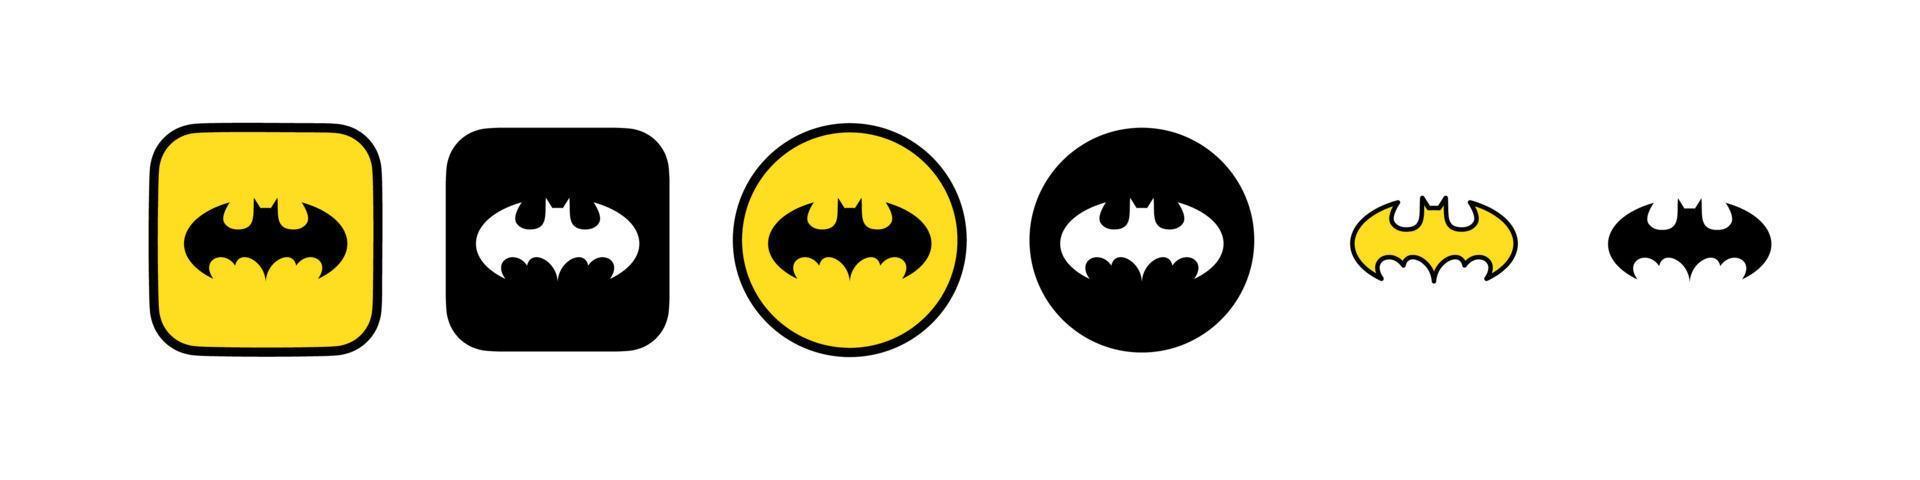 Batman-Logo-Vektor, freier Vektor der Batman-Ikone